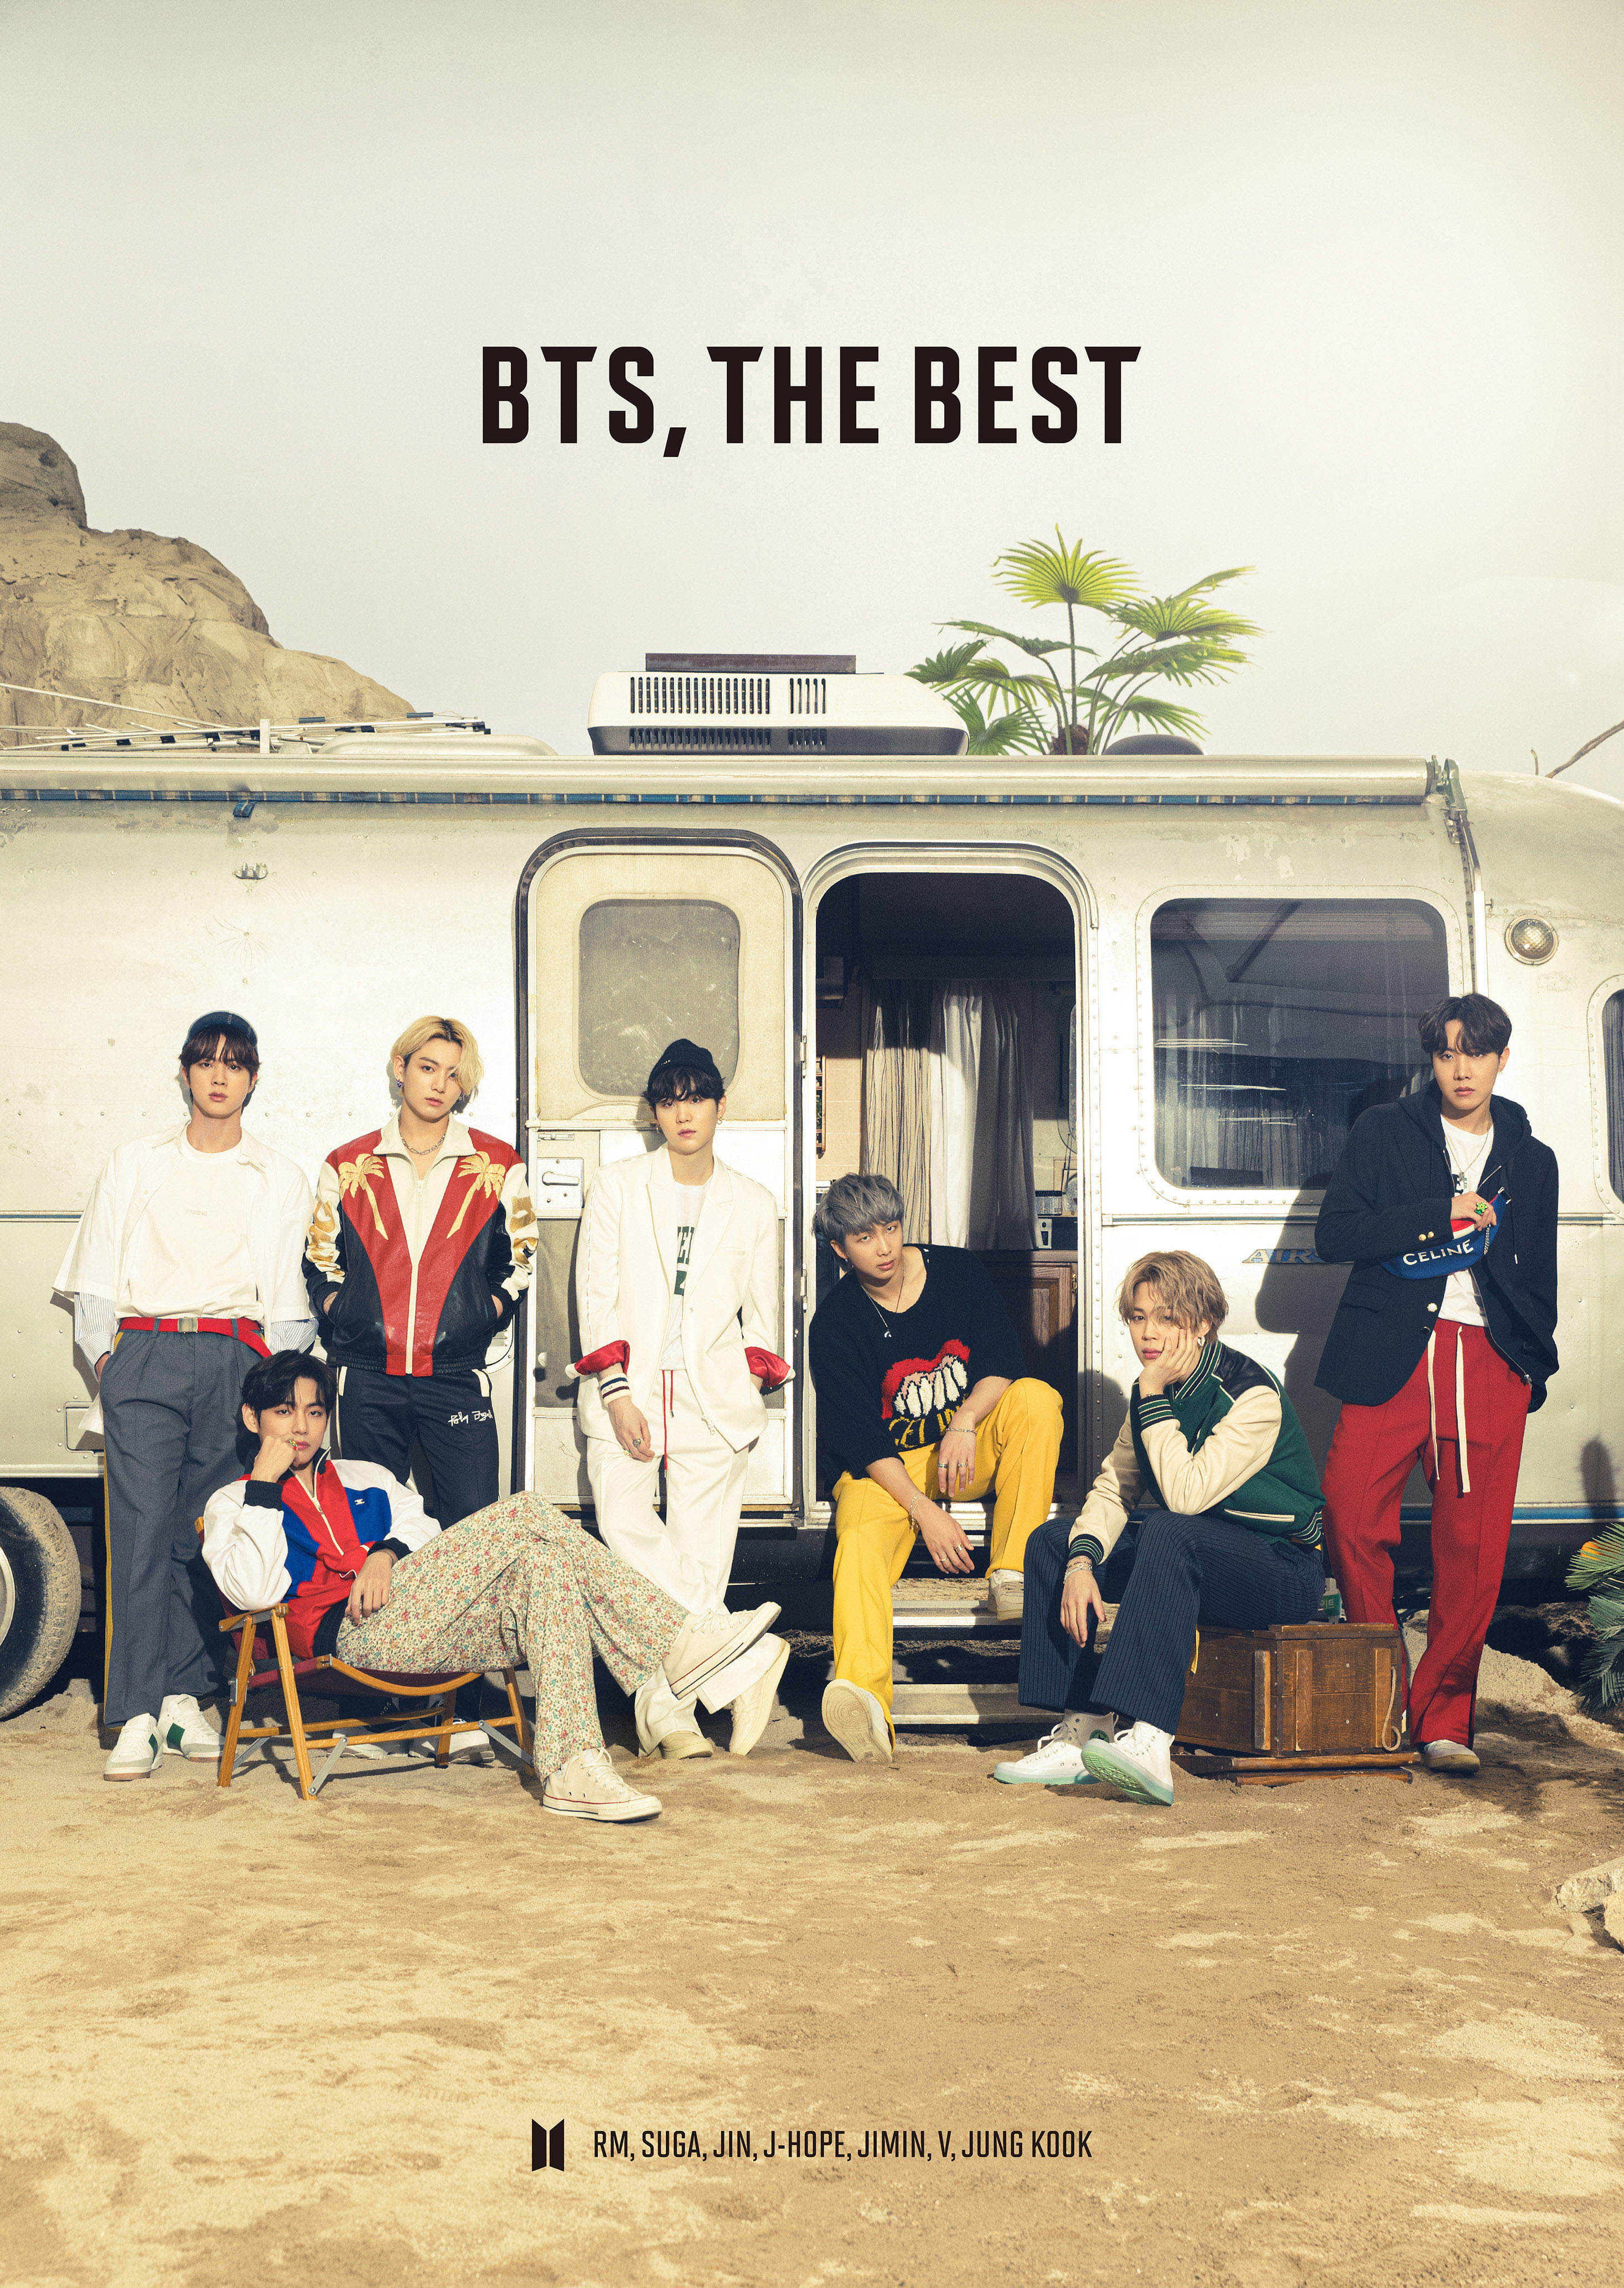 BTS - BEST ALBUM『BTS, THE BEST』Special Site